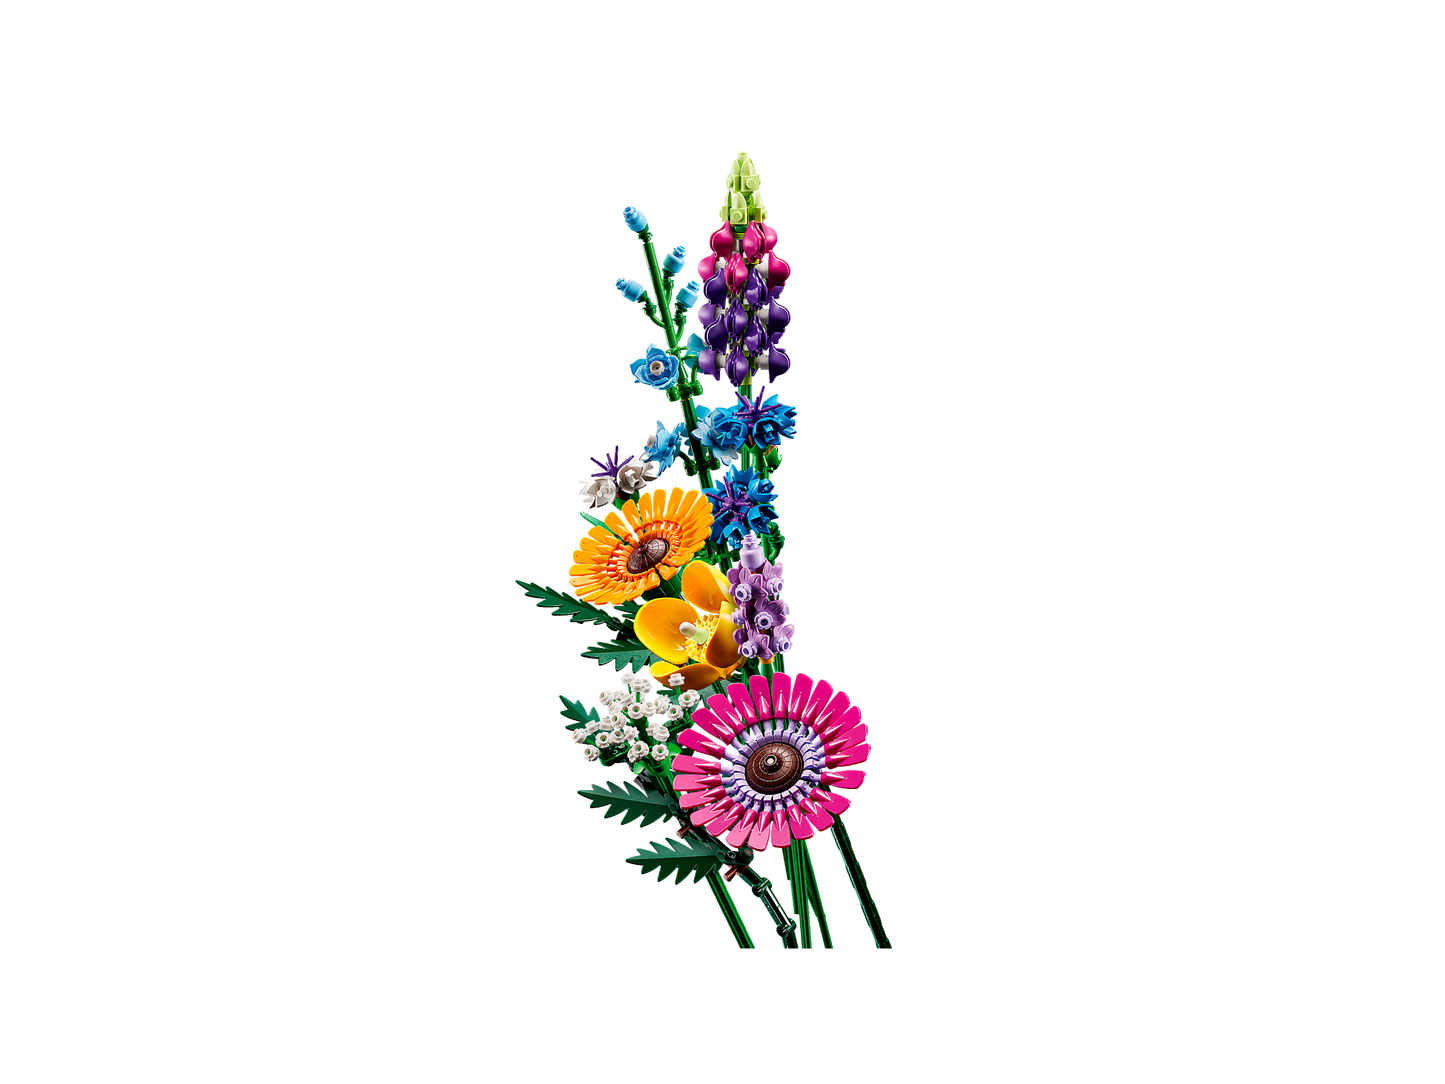 10313 LEGO ICONS - Bouquet fiori selvatici